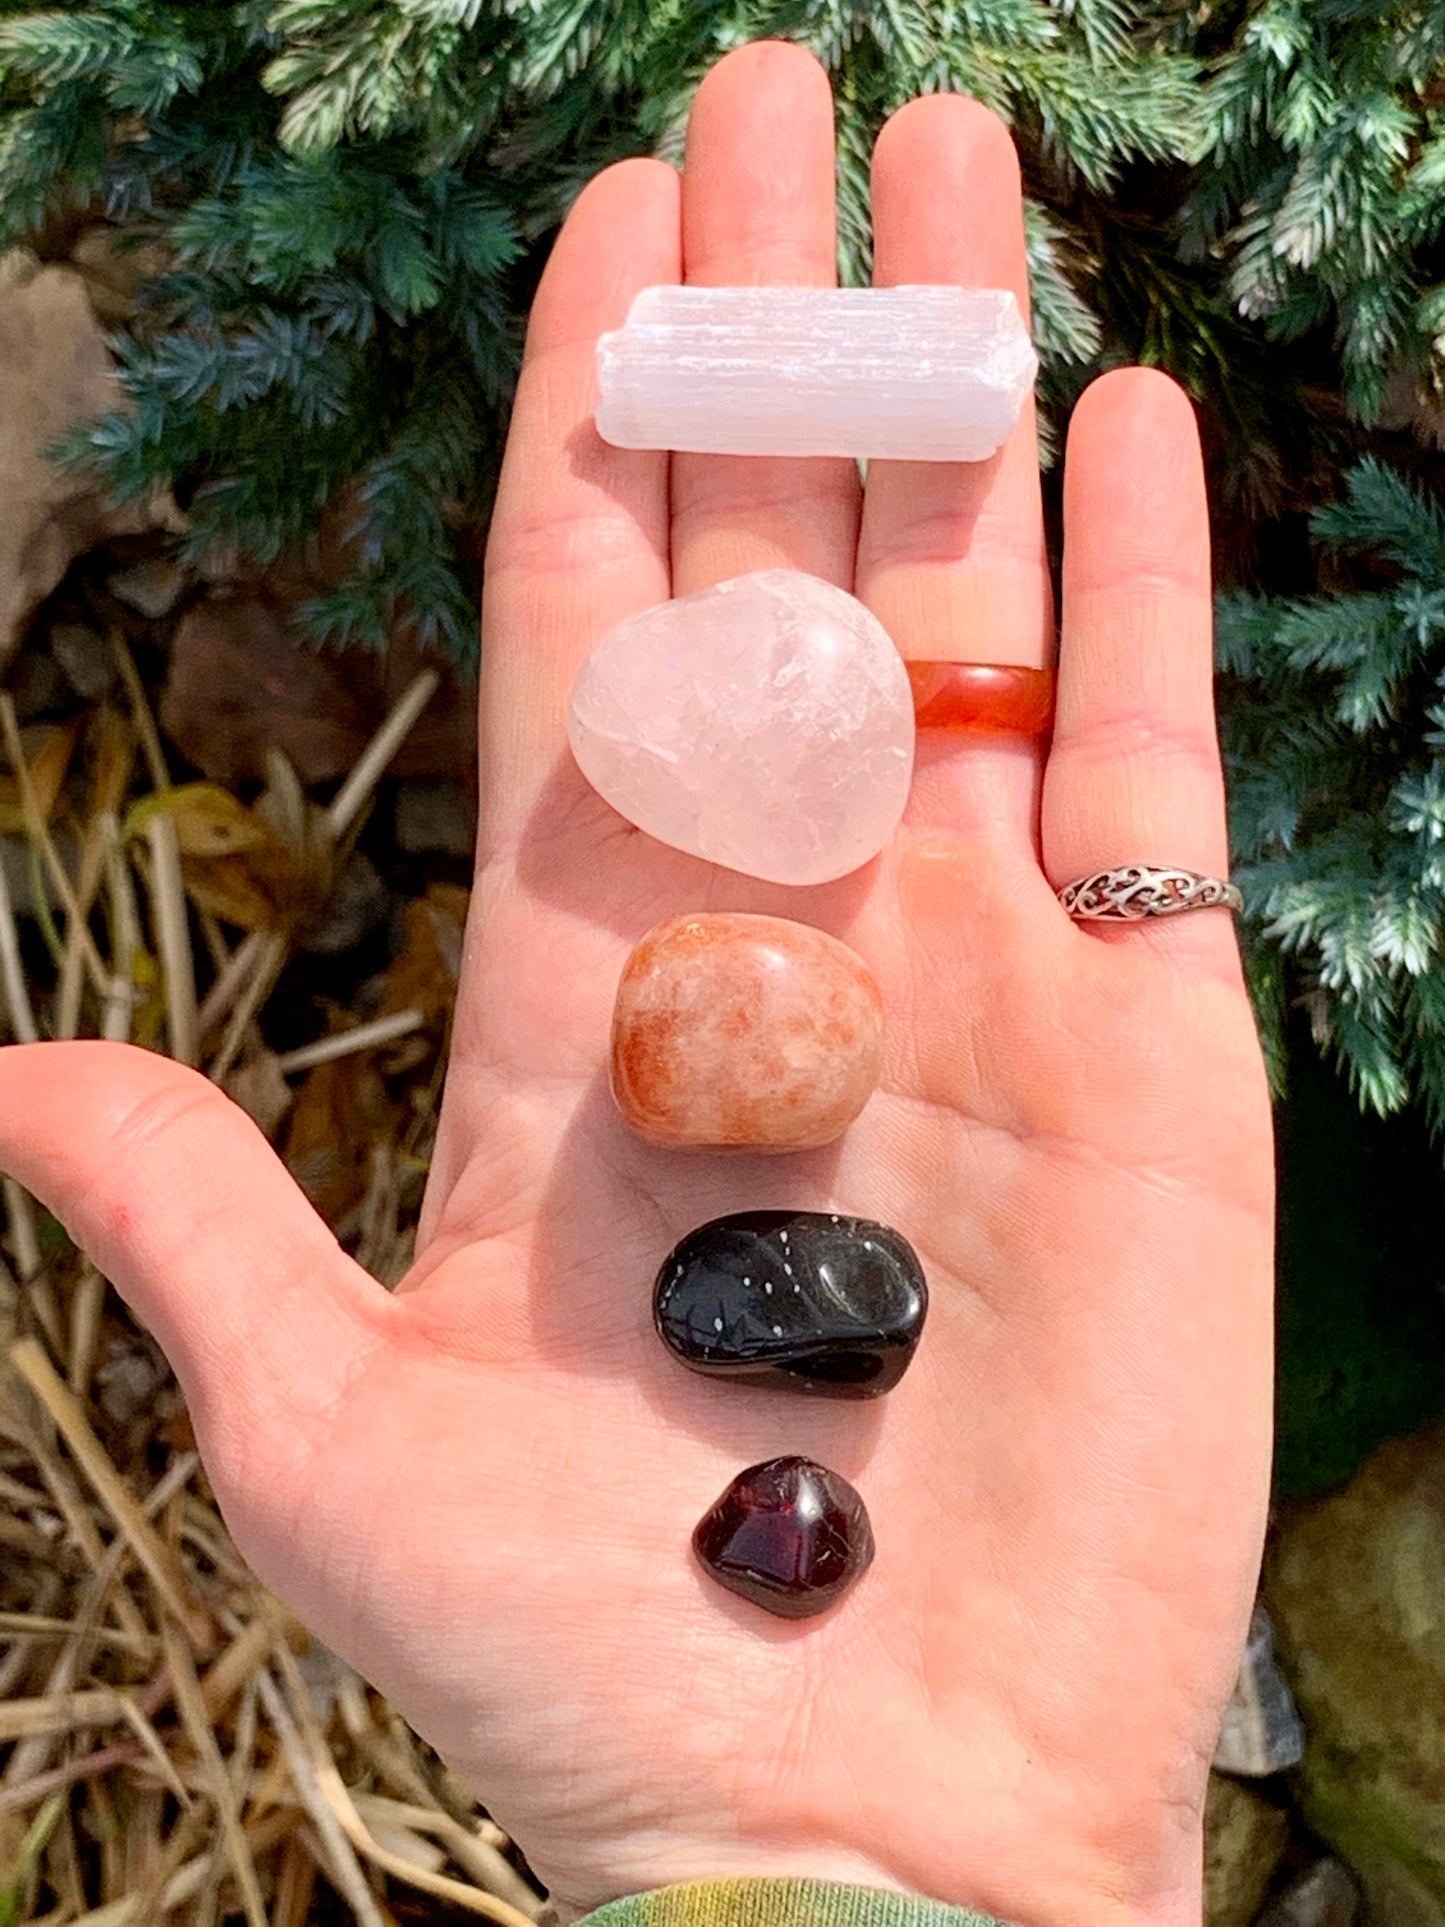 Winter Solstice Stones / Seasonal Holiday Metaphysical Crystal Healing Set